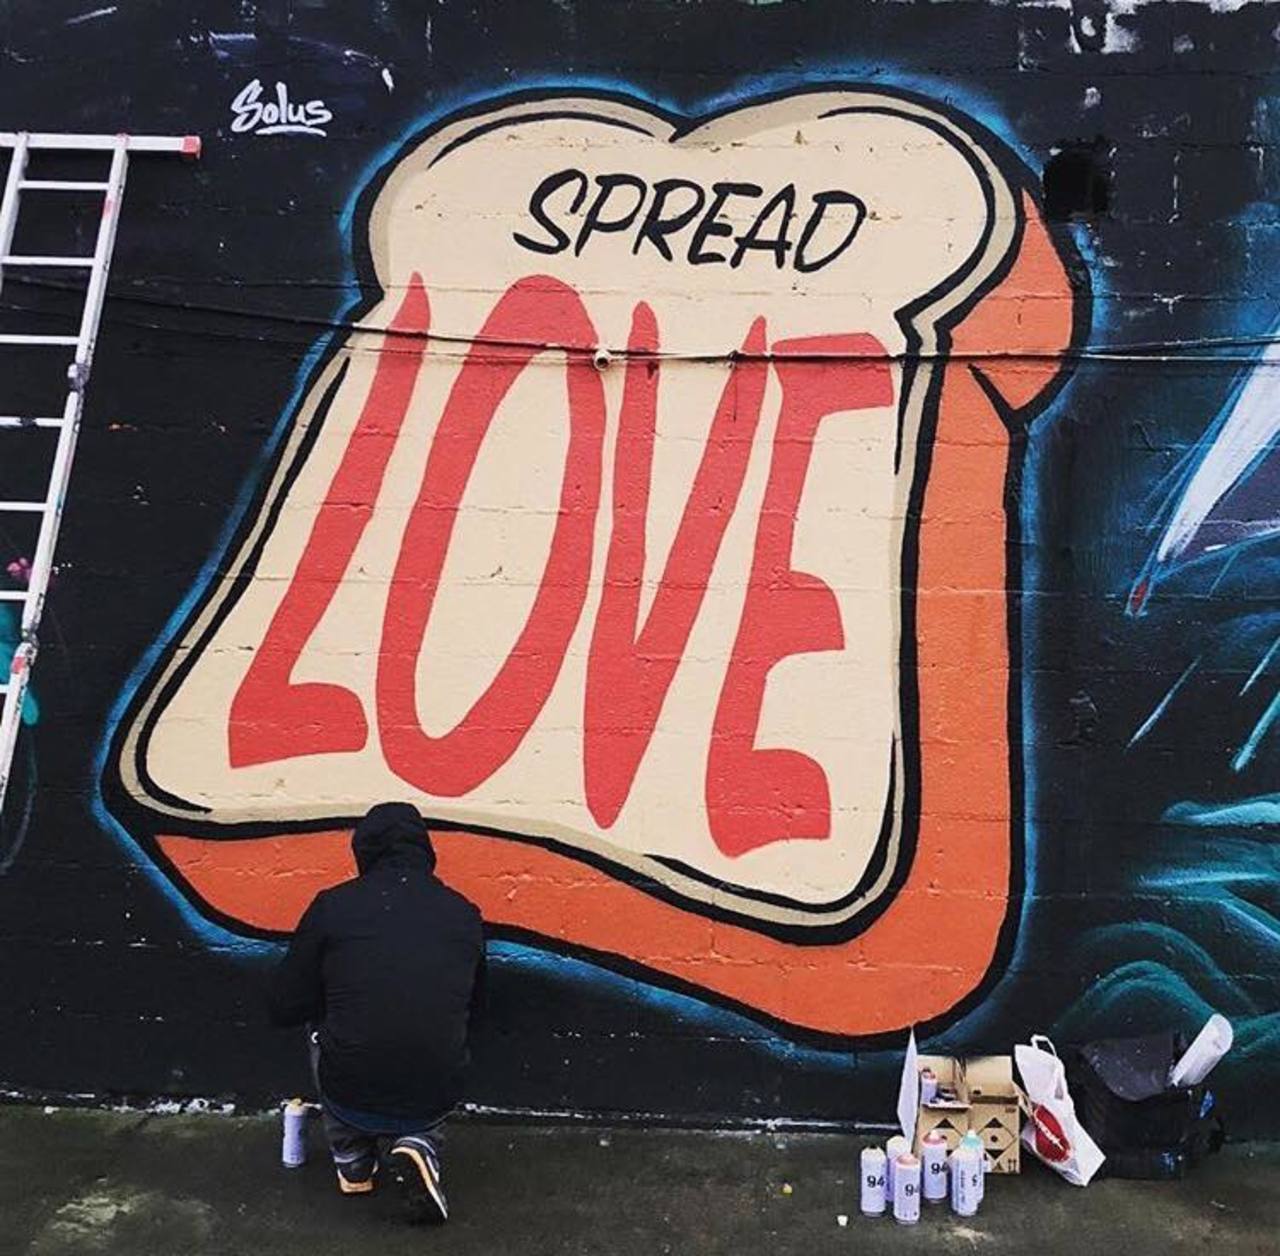 Spread love, folks! After all, it's healthier than butter  -- Piece painted by @SolusStreetArt (http://globalstreetart.com/solus) in #Dublin, #Ireland. -- #globalstreetart #streetart #graffiti https://t.co/jkm0iZd0L7